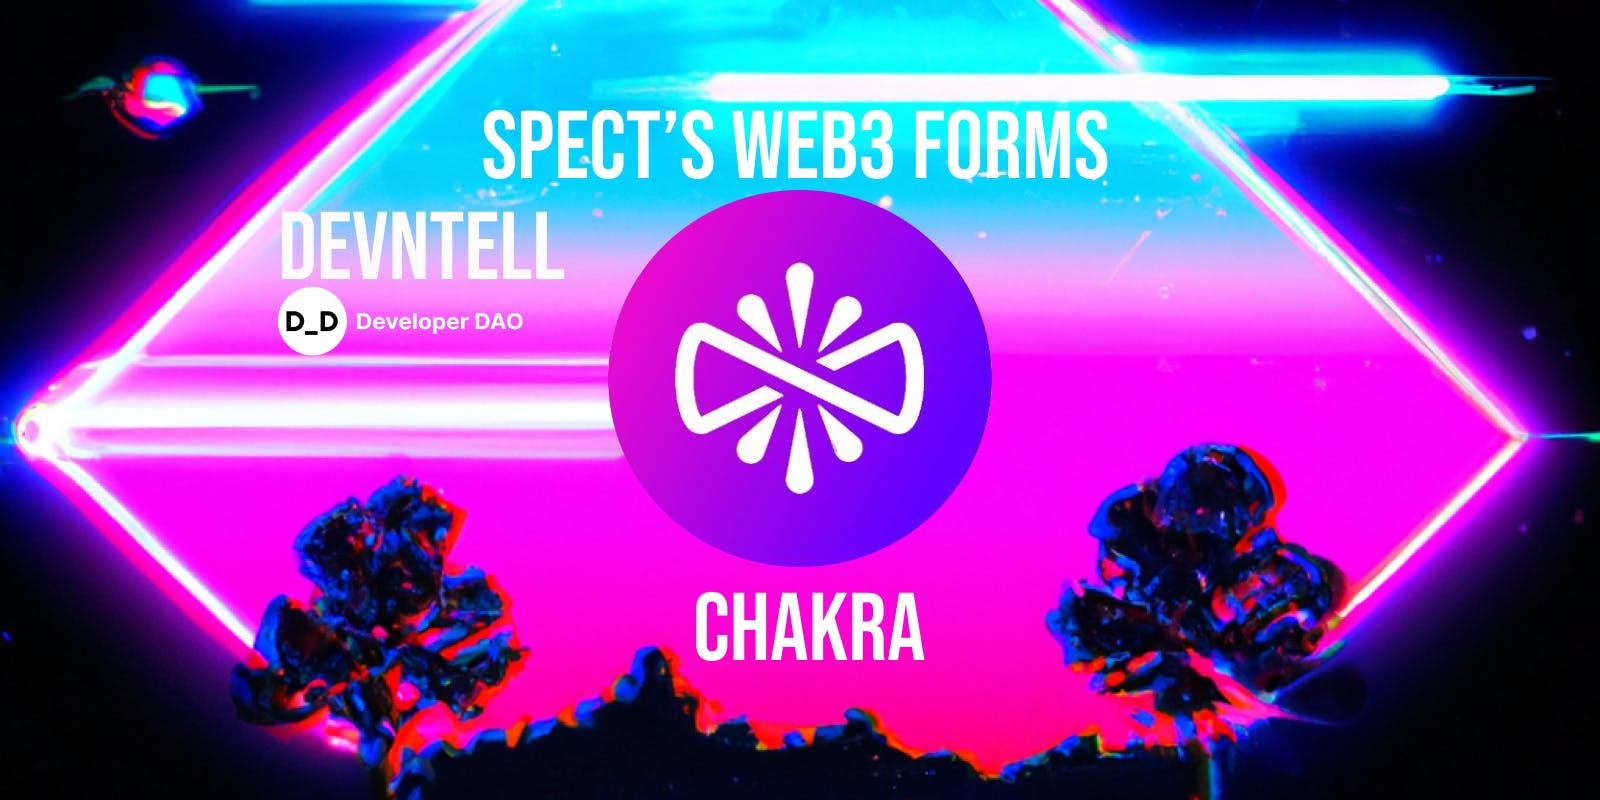 DevNTell - Spect's Web3 Forms